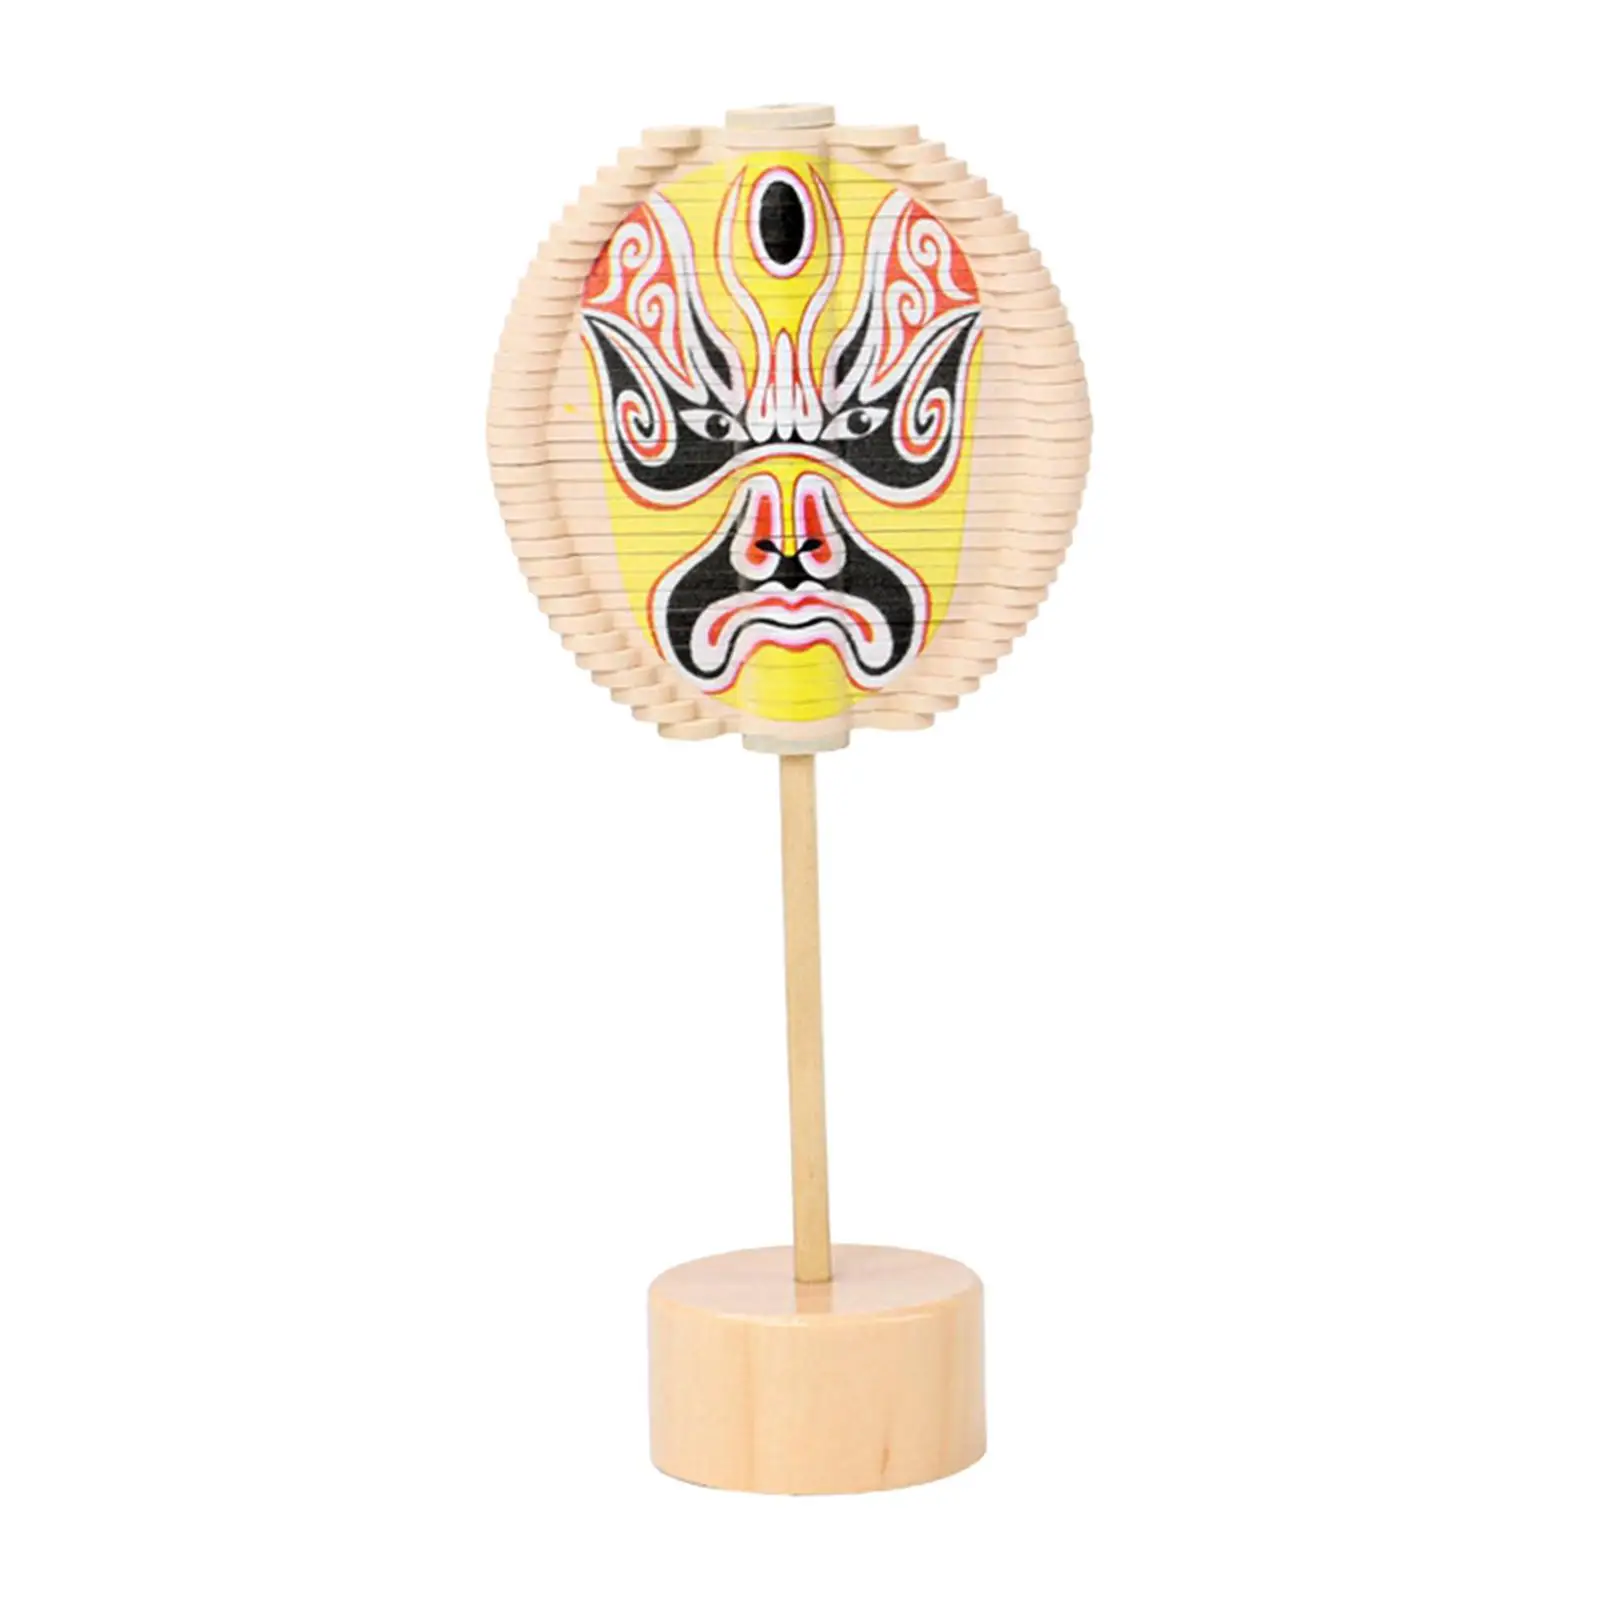 Wooden Rotating Spiral Lollipop Desktop Decoration Gadget for Party Favors